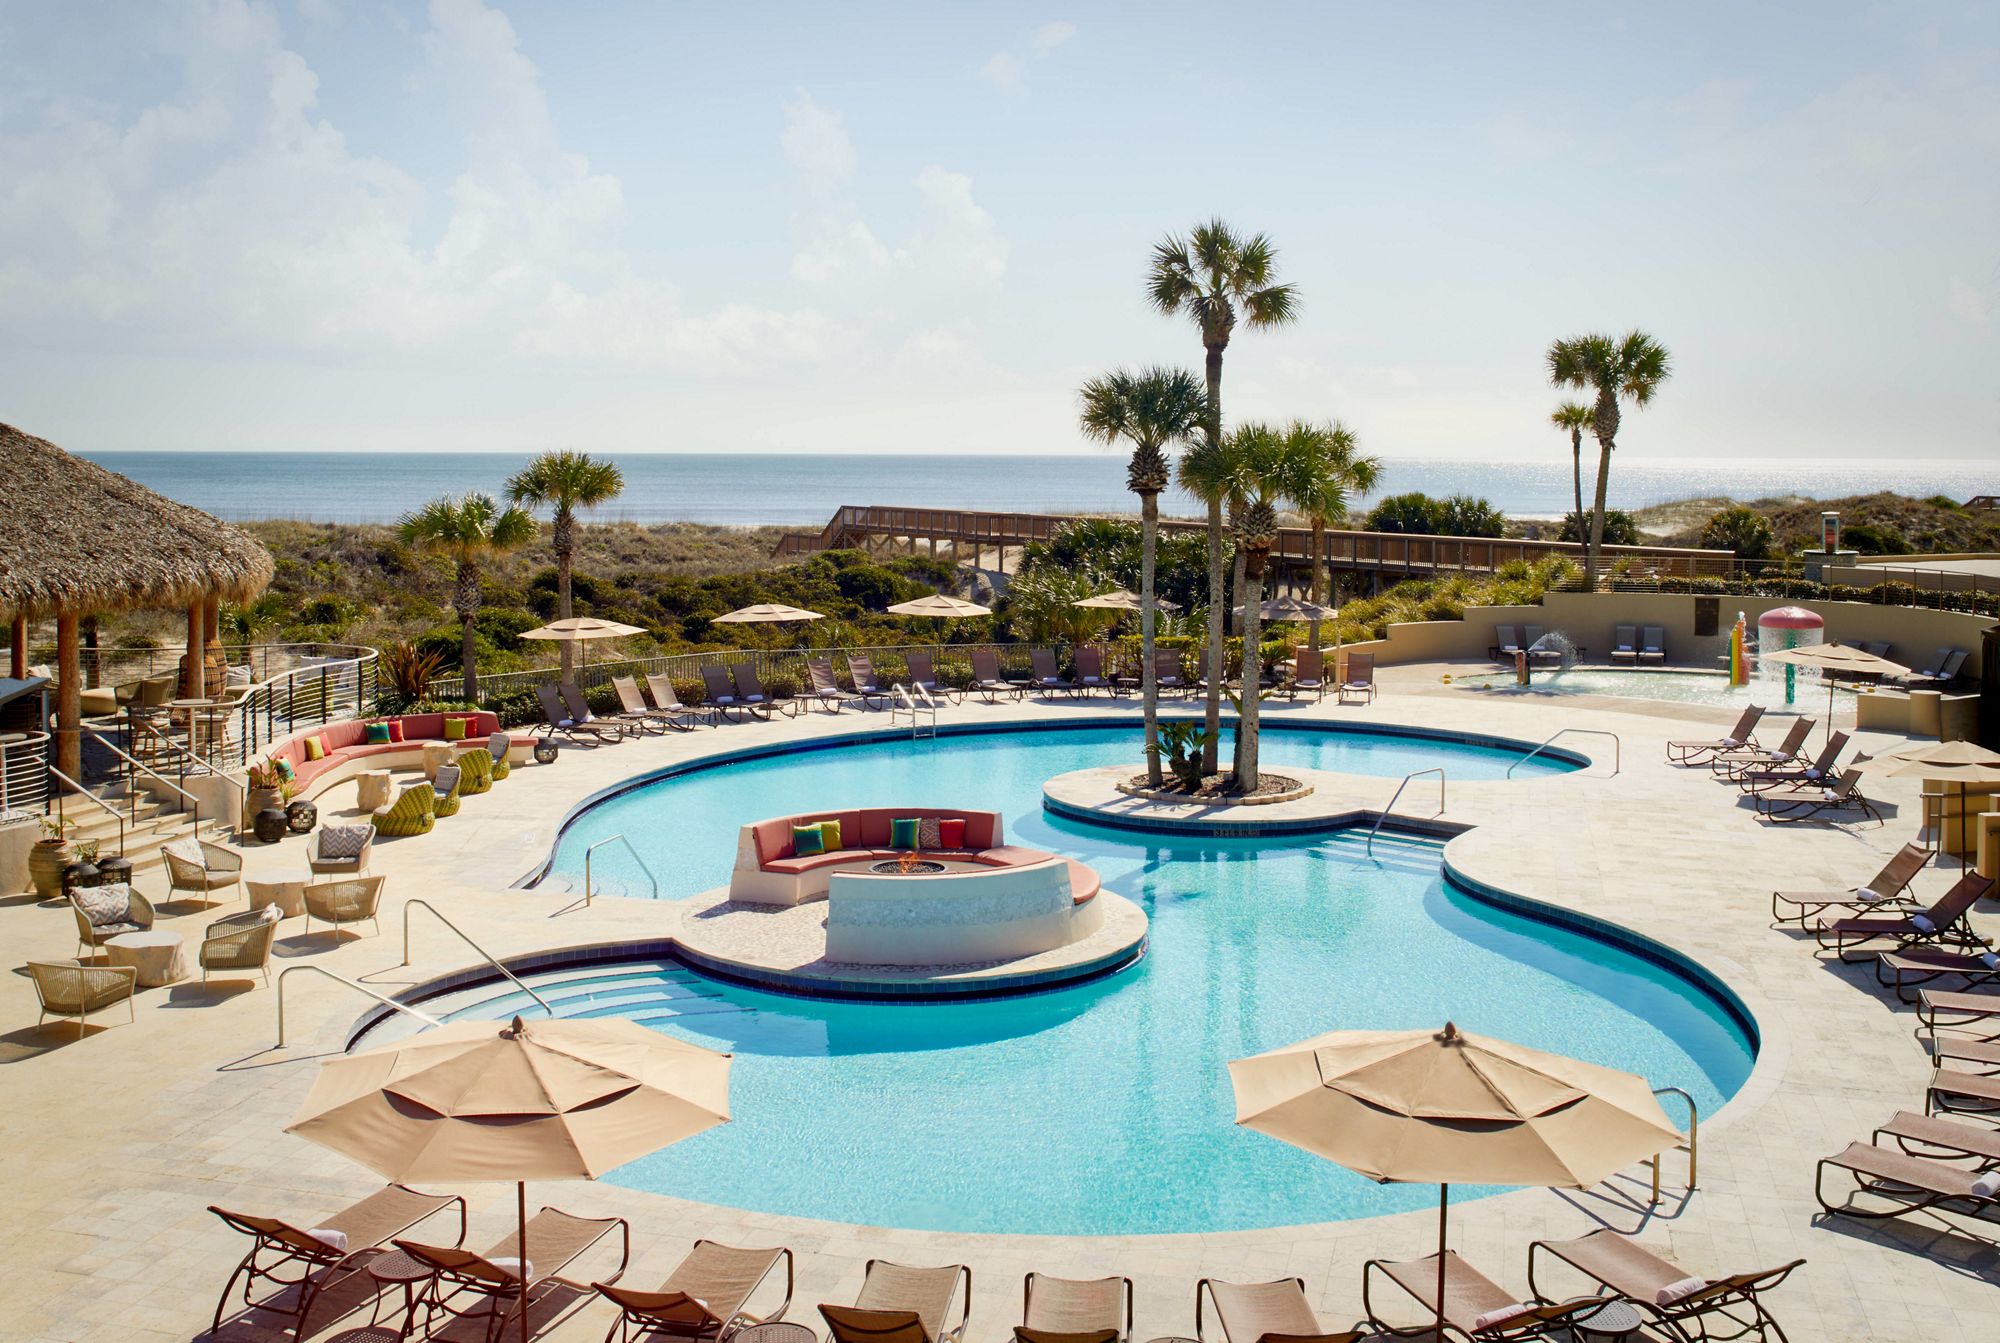 Pool & Beach Services | The Ritz-Carlton, Amelia Island